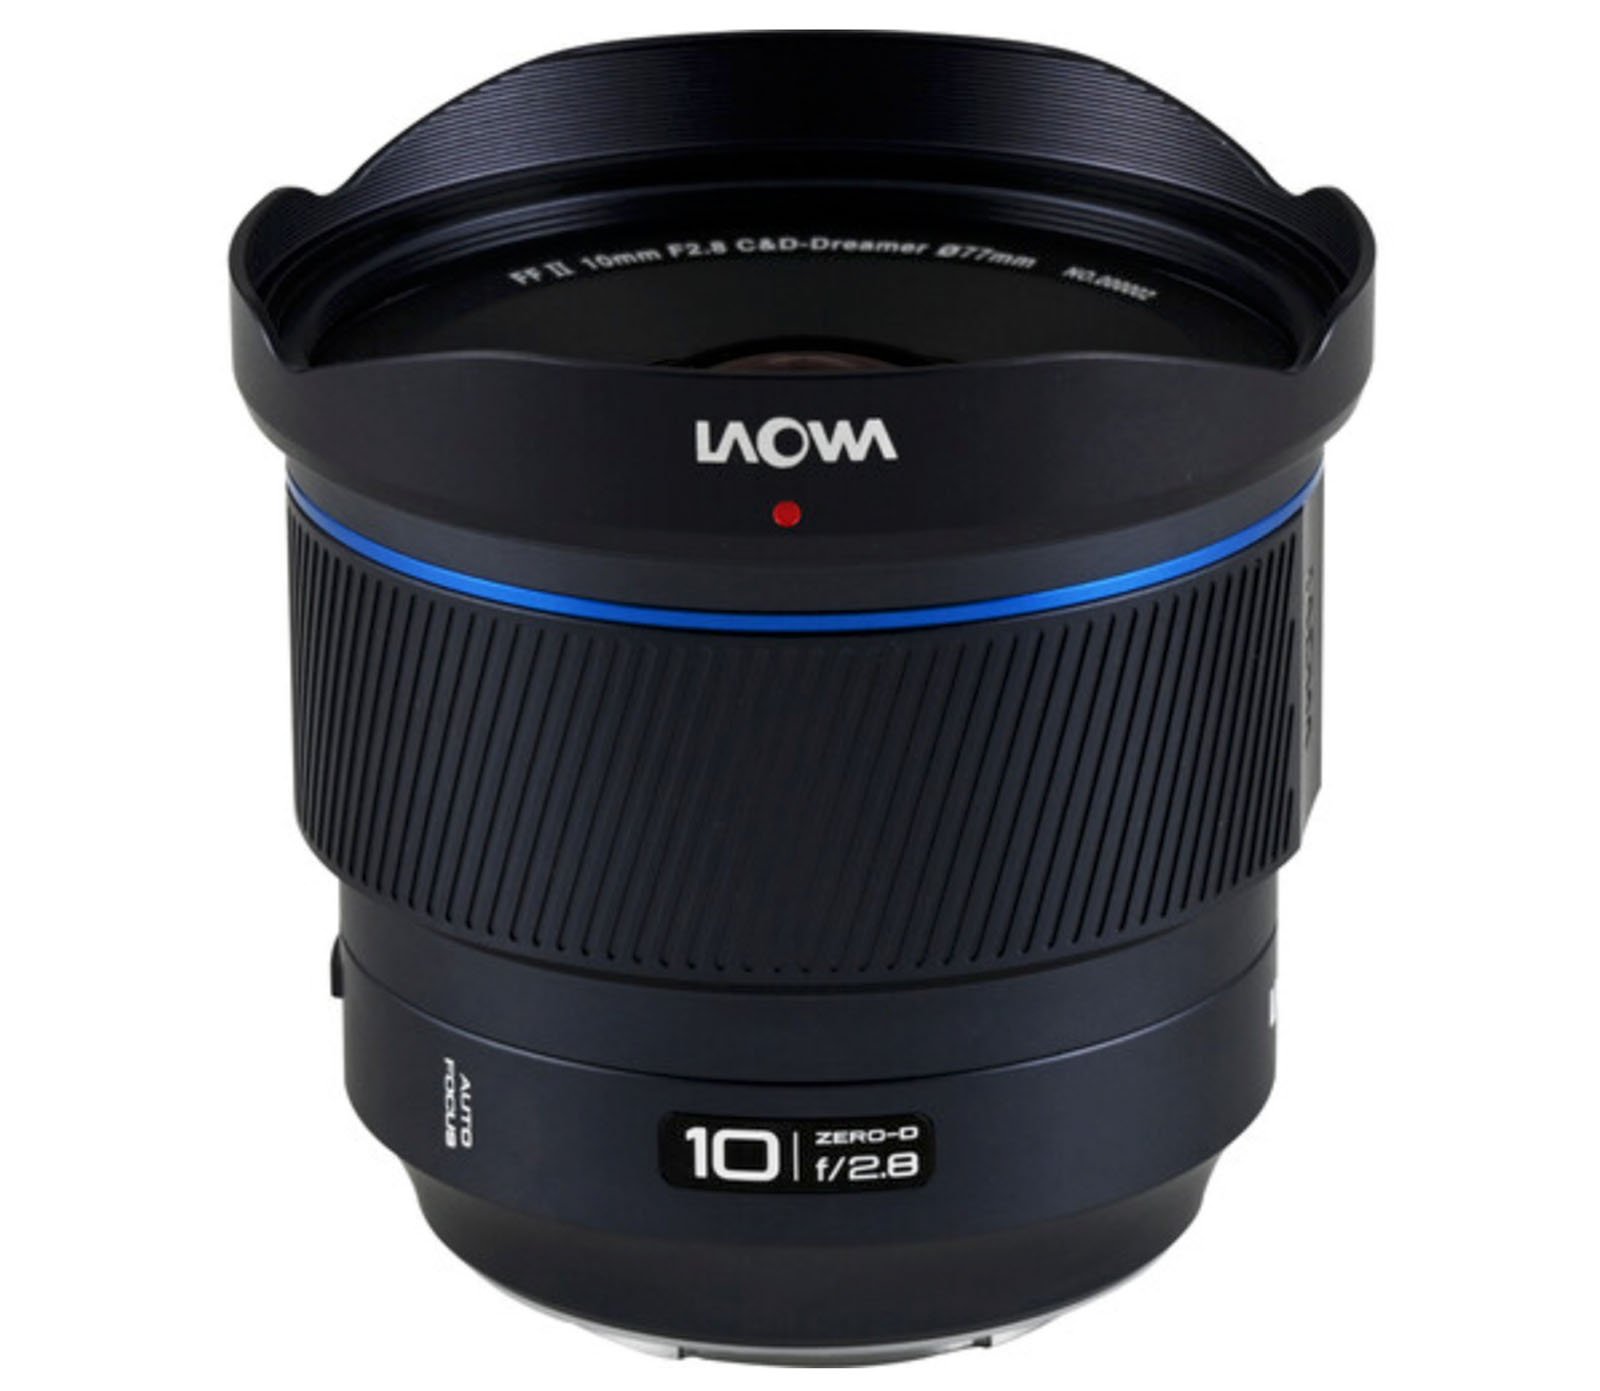 Laowa 10mm f/2.8 Zero-D FF lens